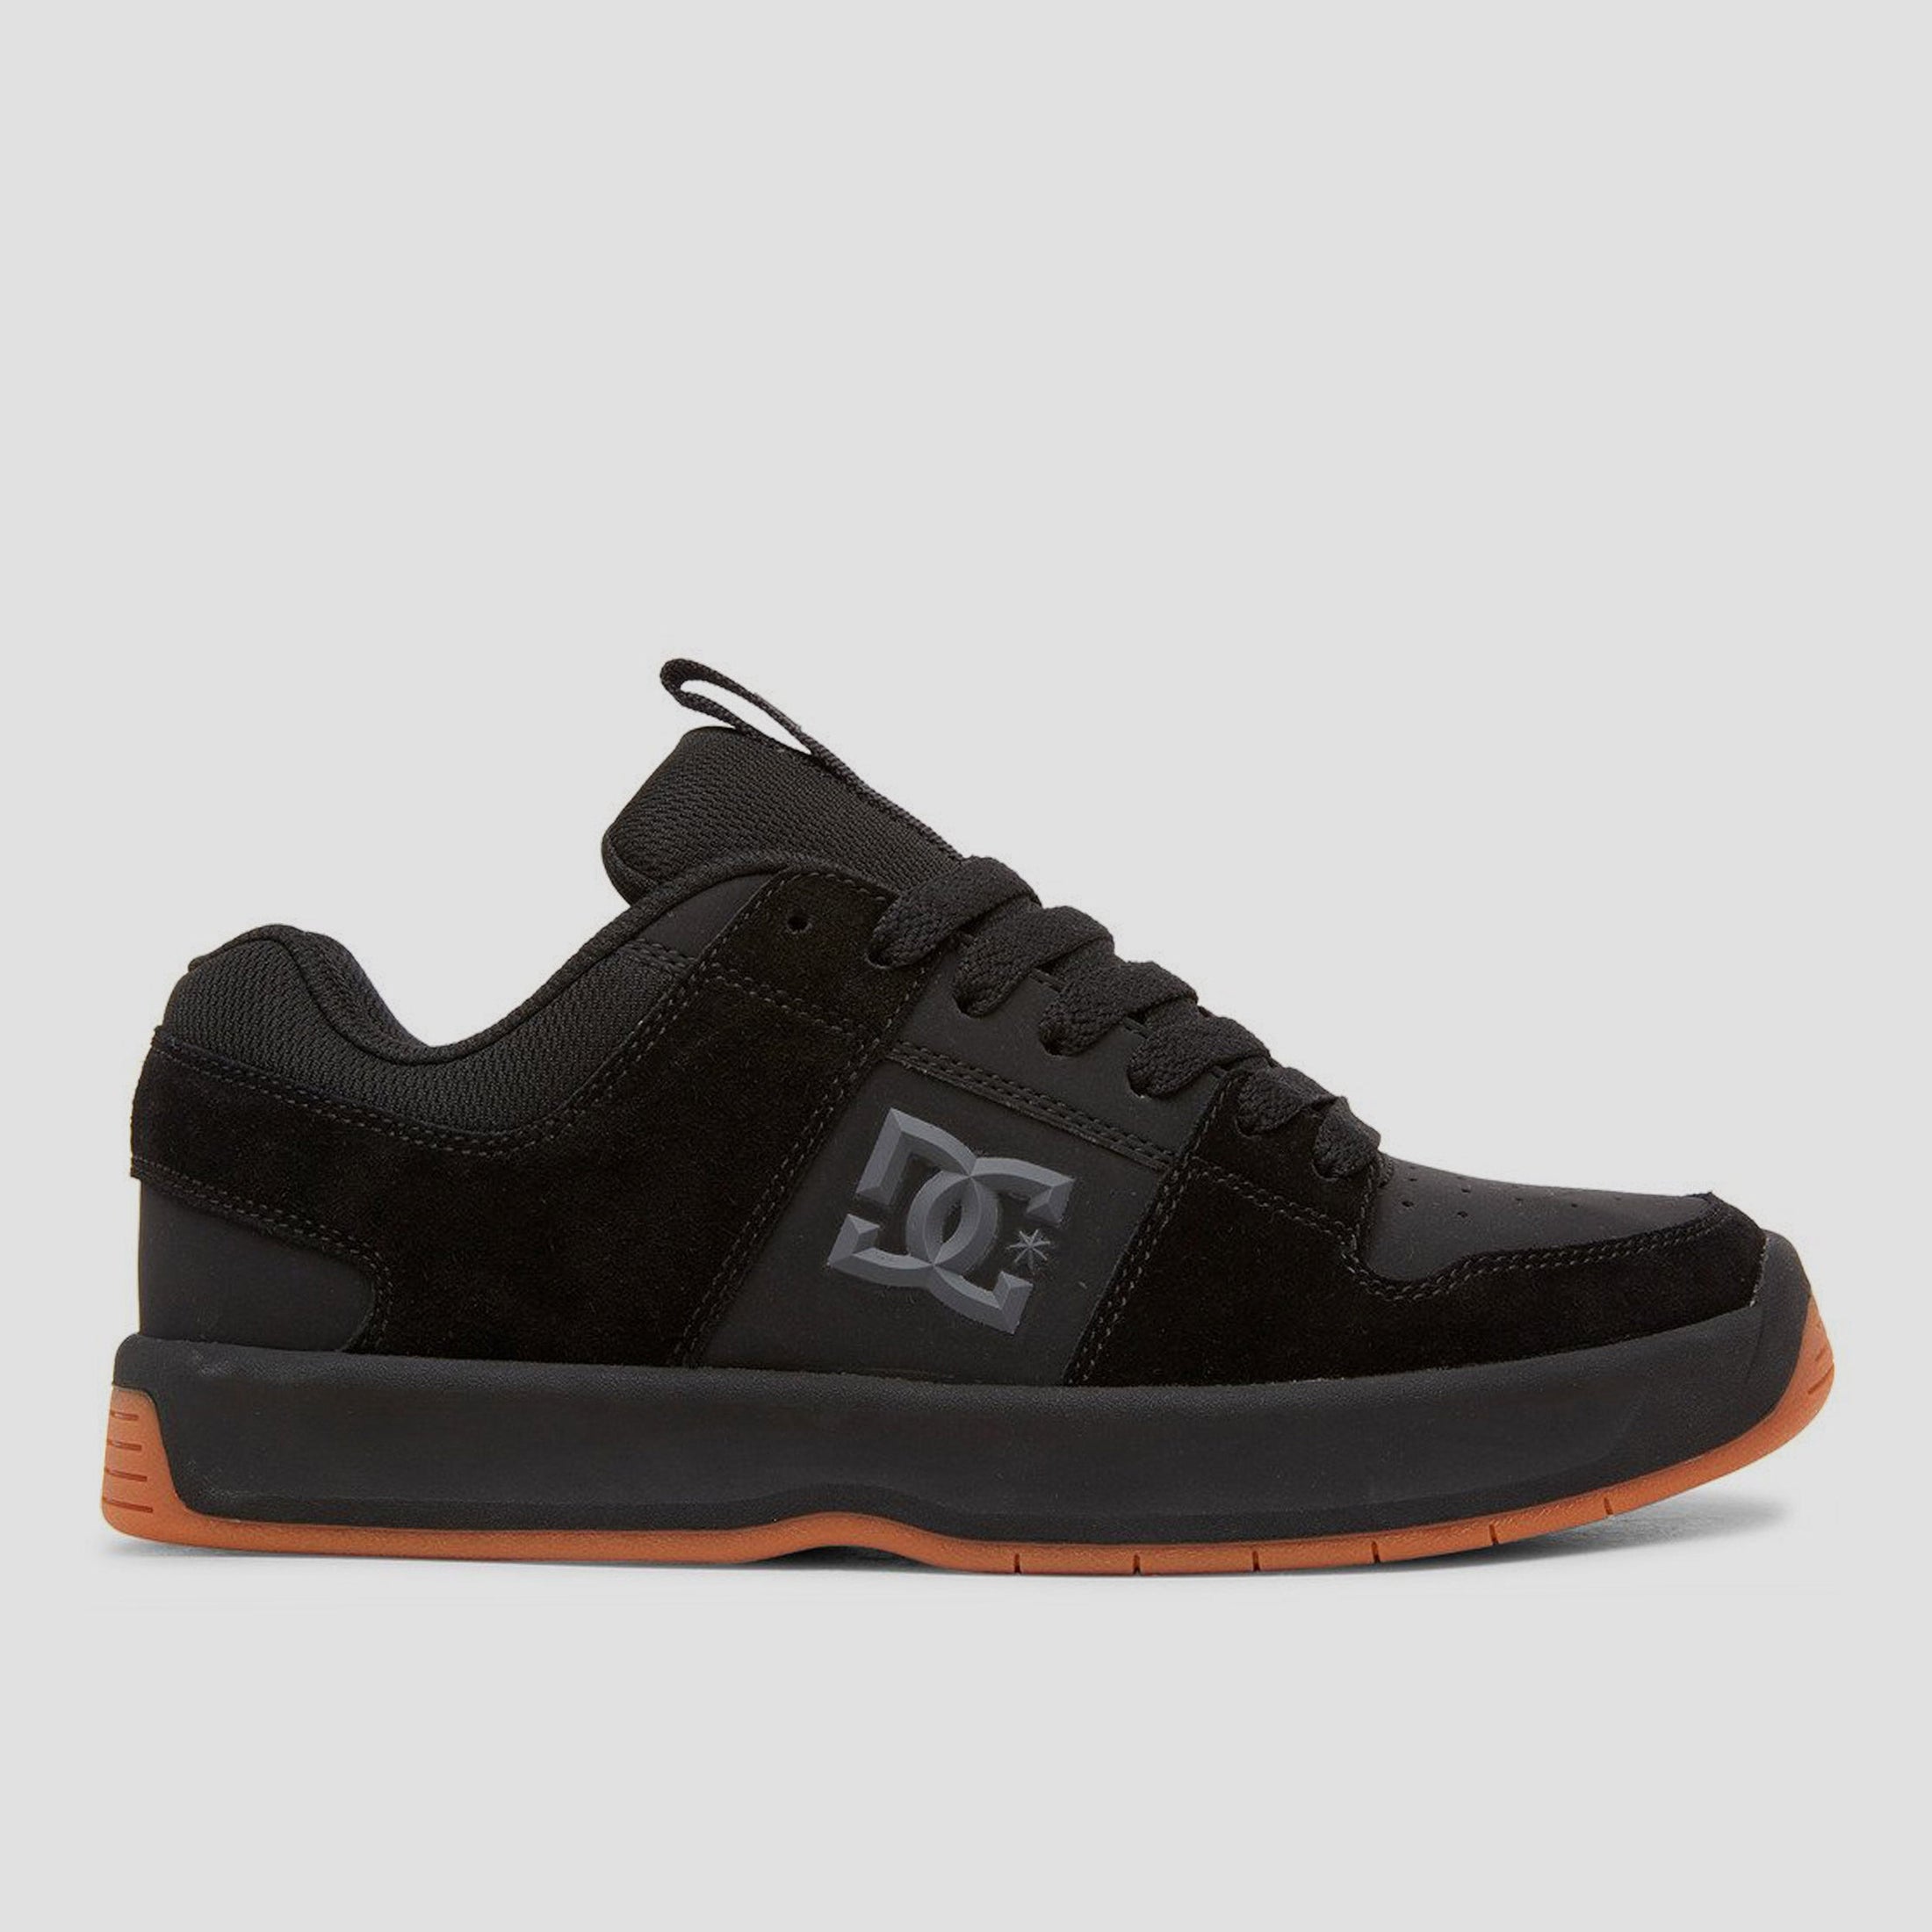 DC Lynx Zero Skate Shoes Black Gum